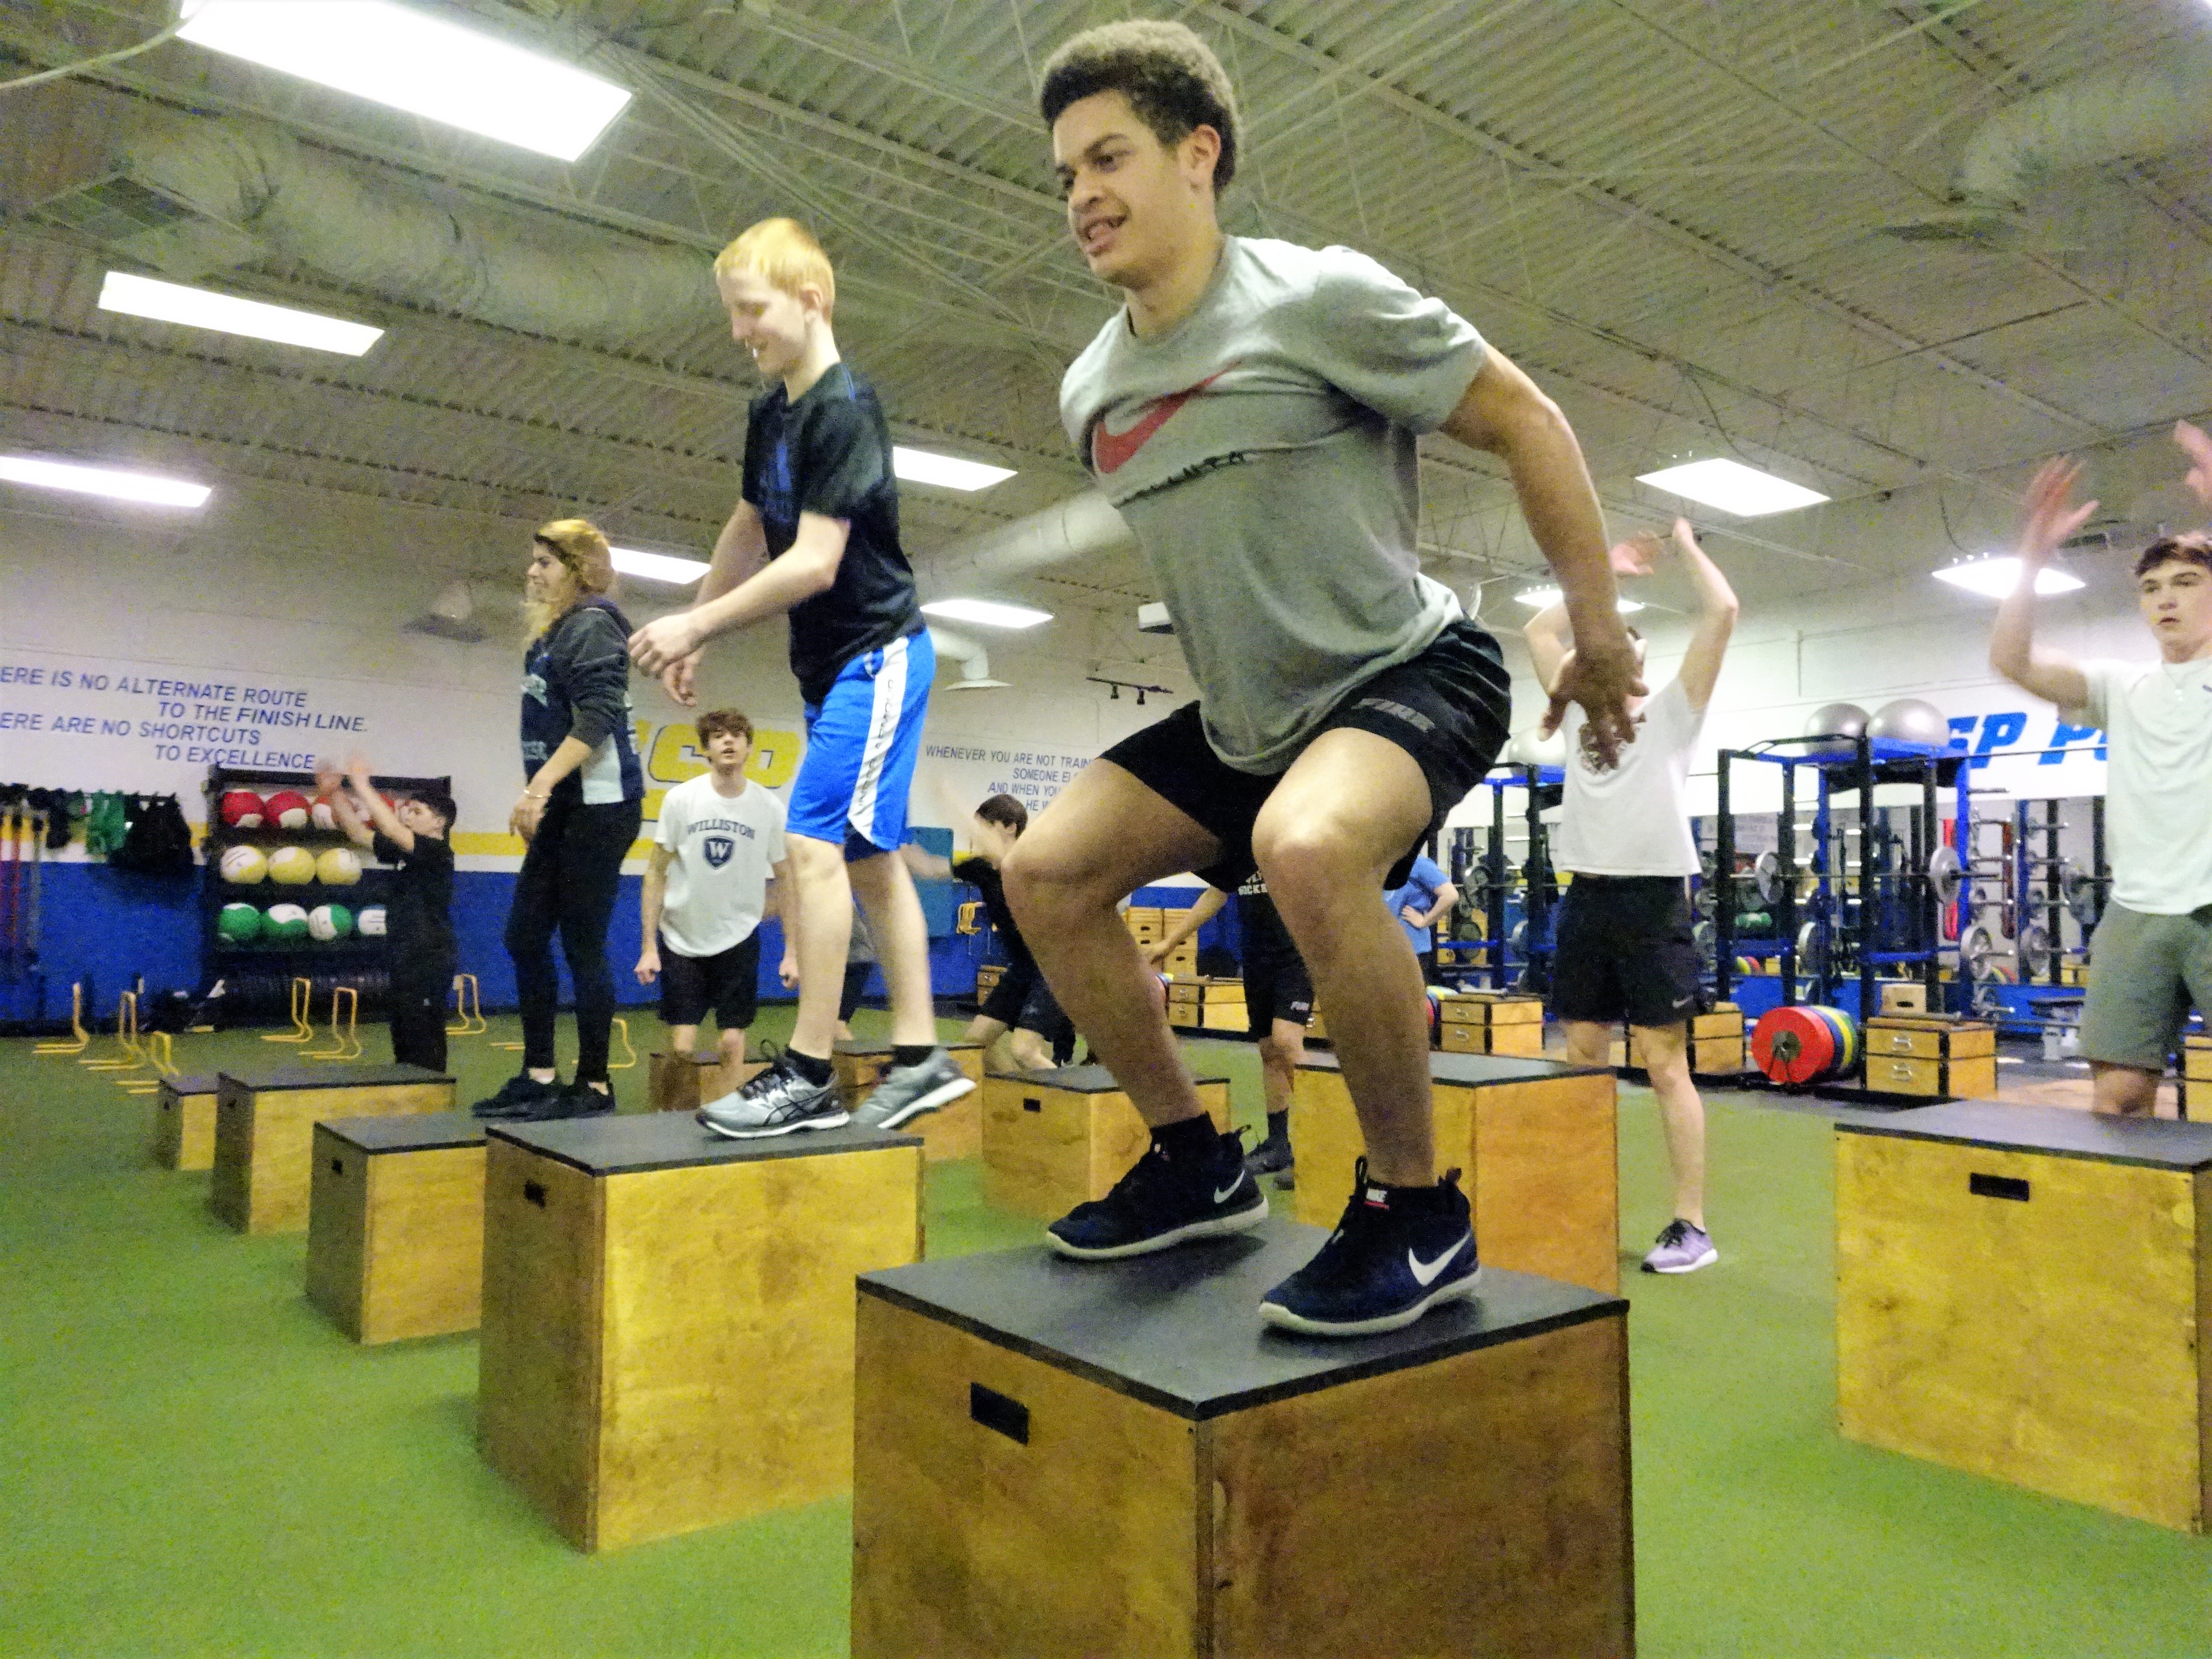 fsp elite athletes performing box jumps